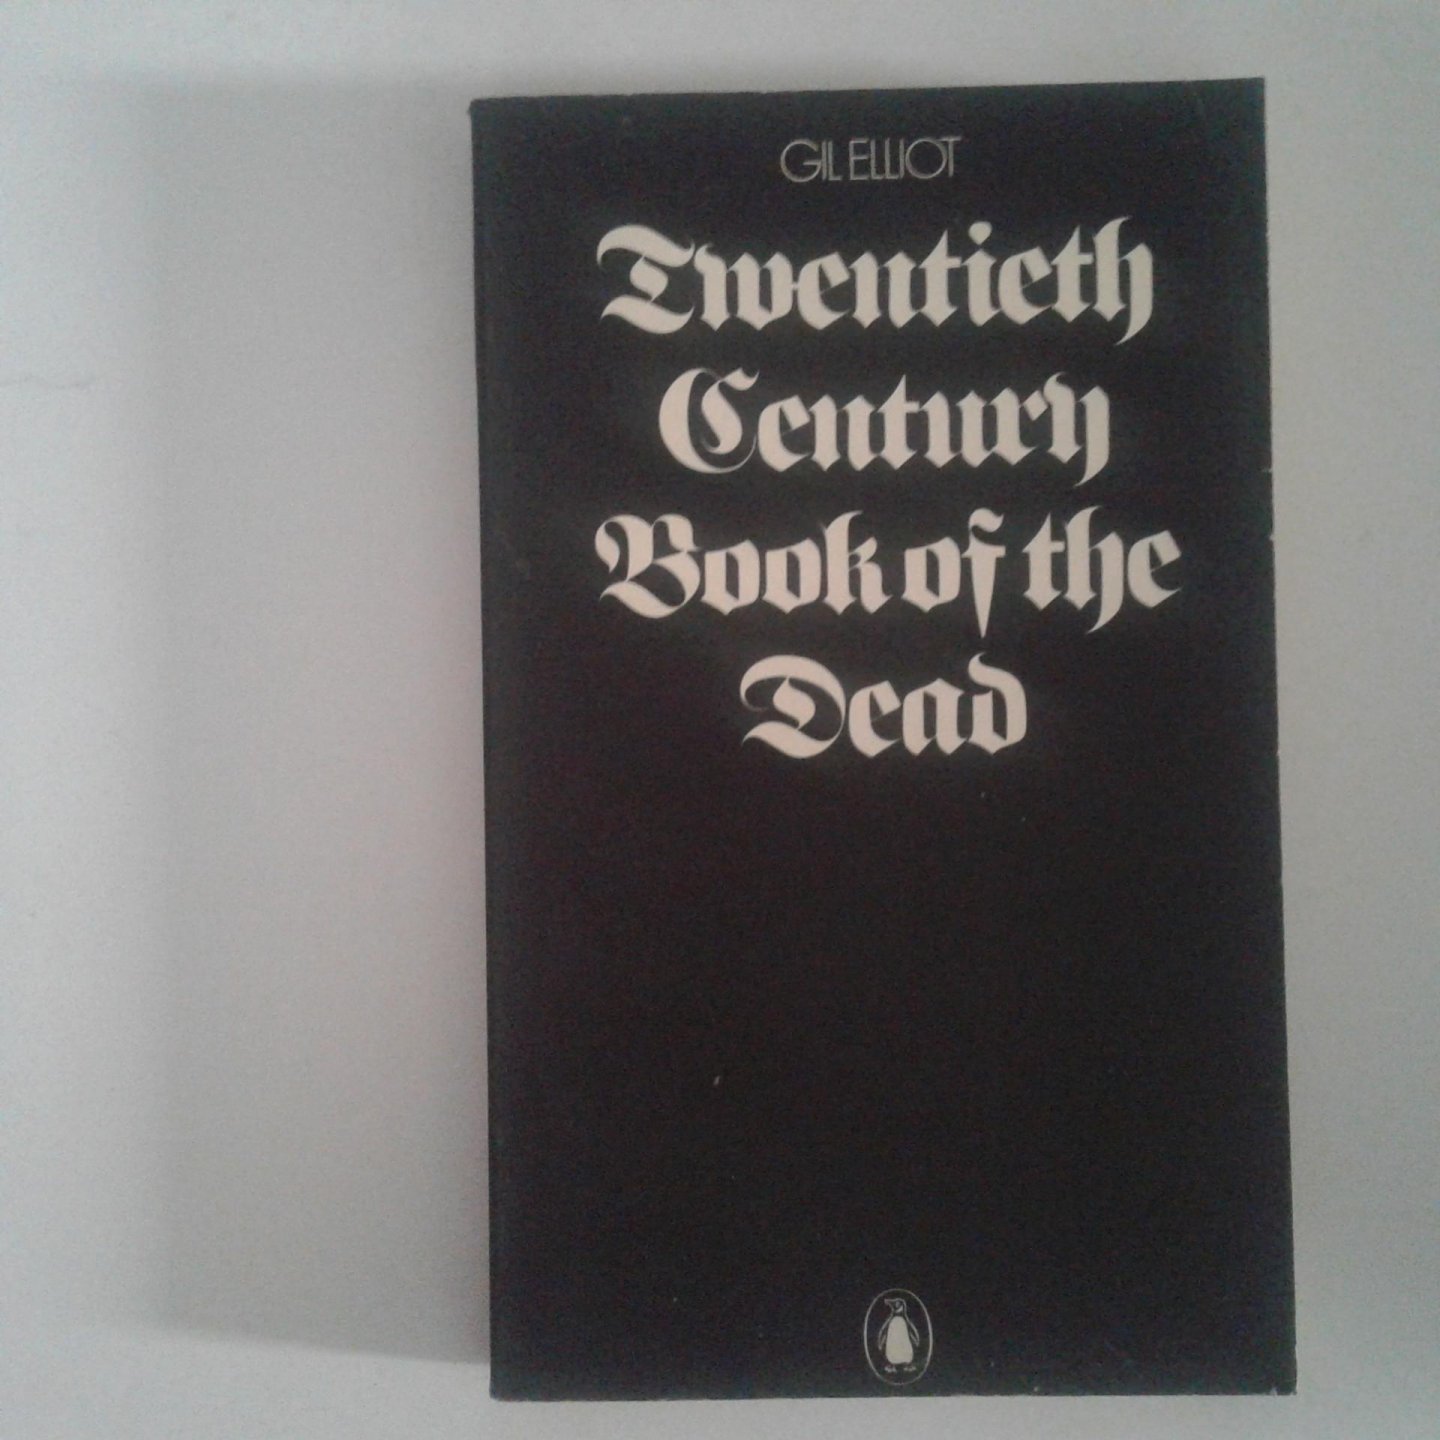 Elliot, Gil - Twentieth Century Book of the Dead